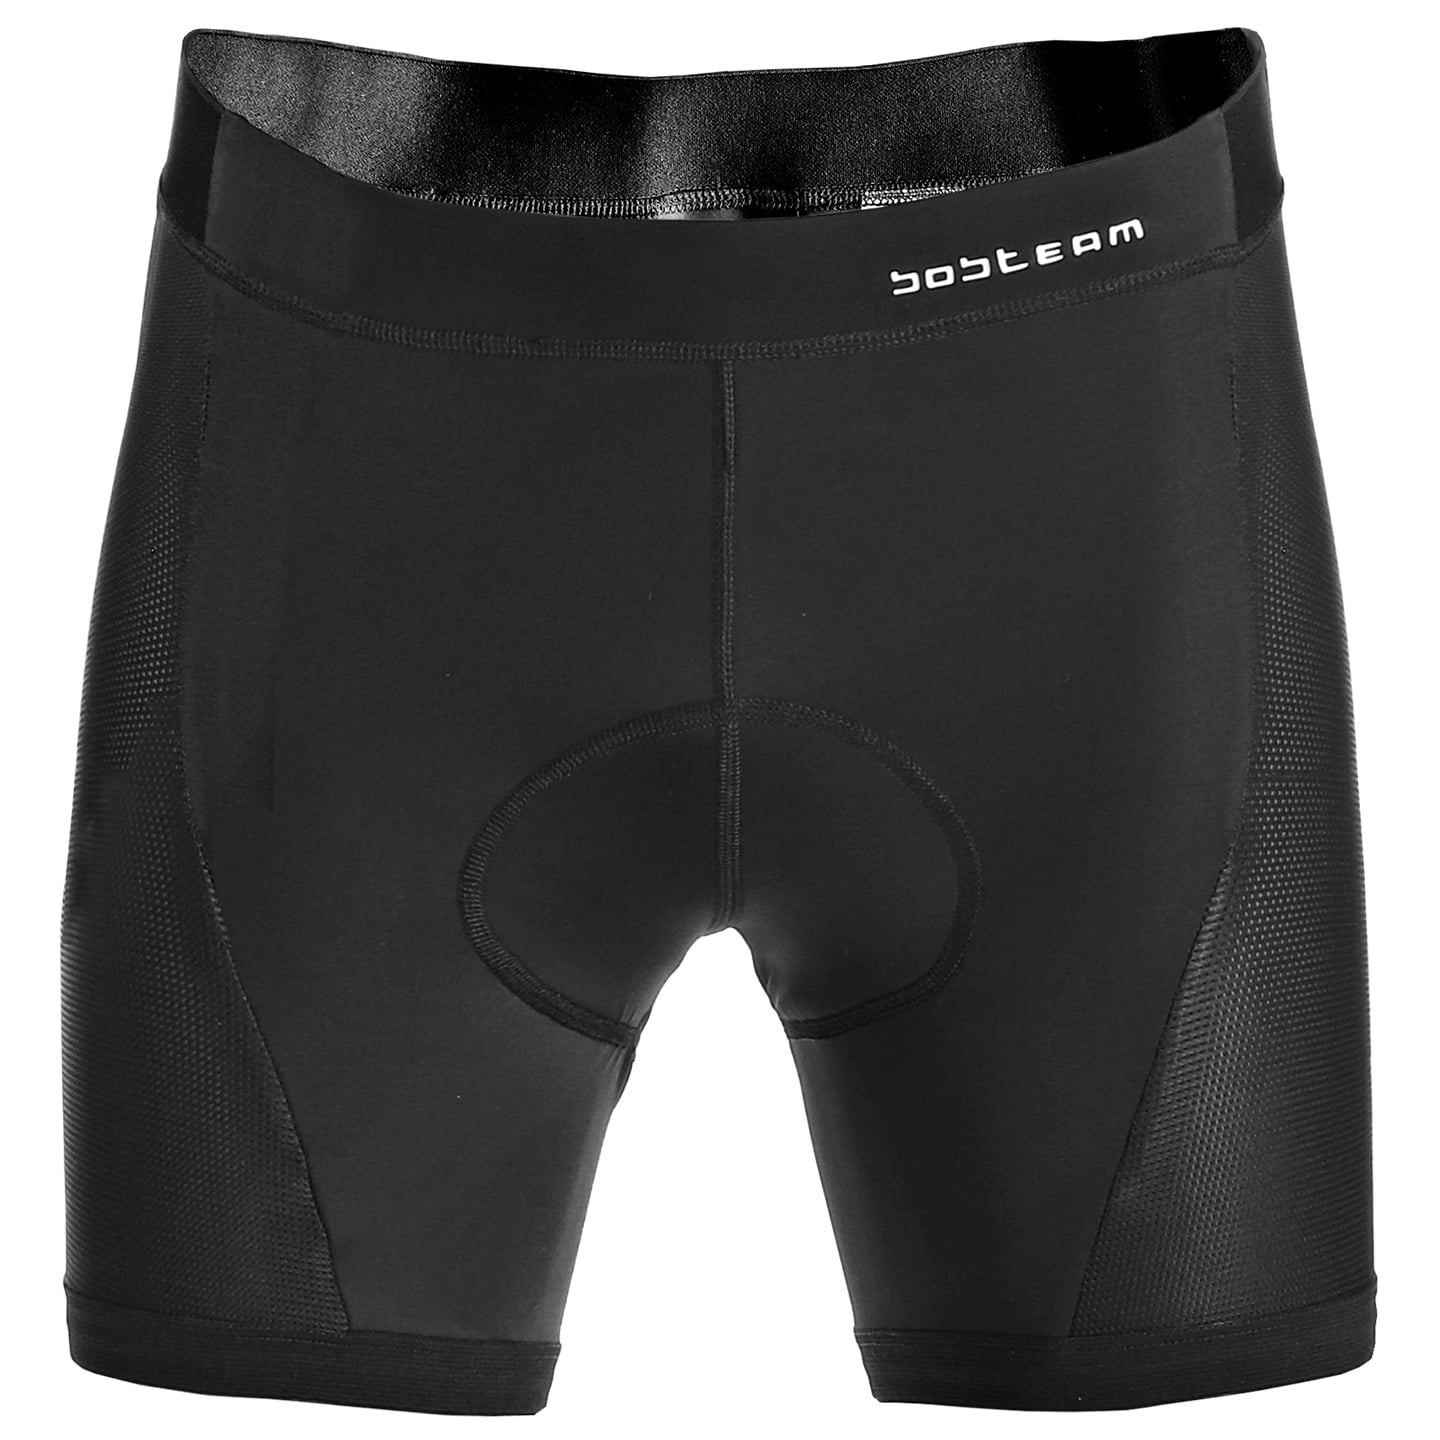 Briefs, BOBTEAM Liner Shorts, for men, size 2XL, Cycle gear